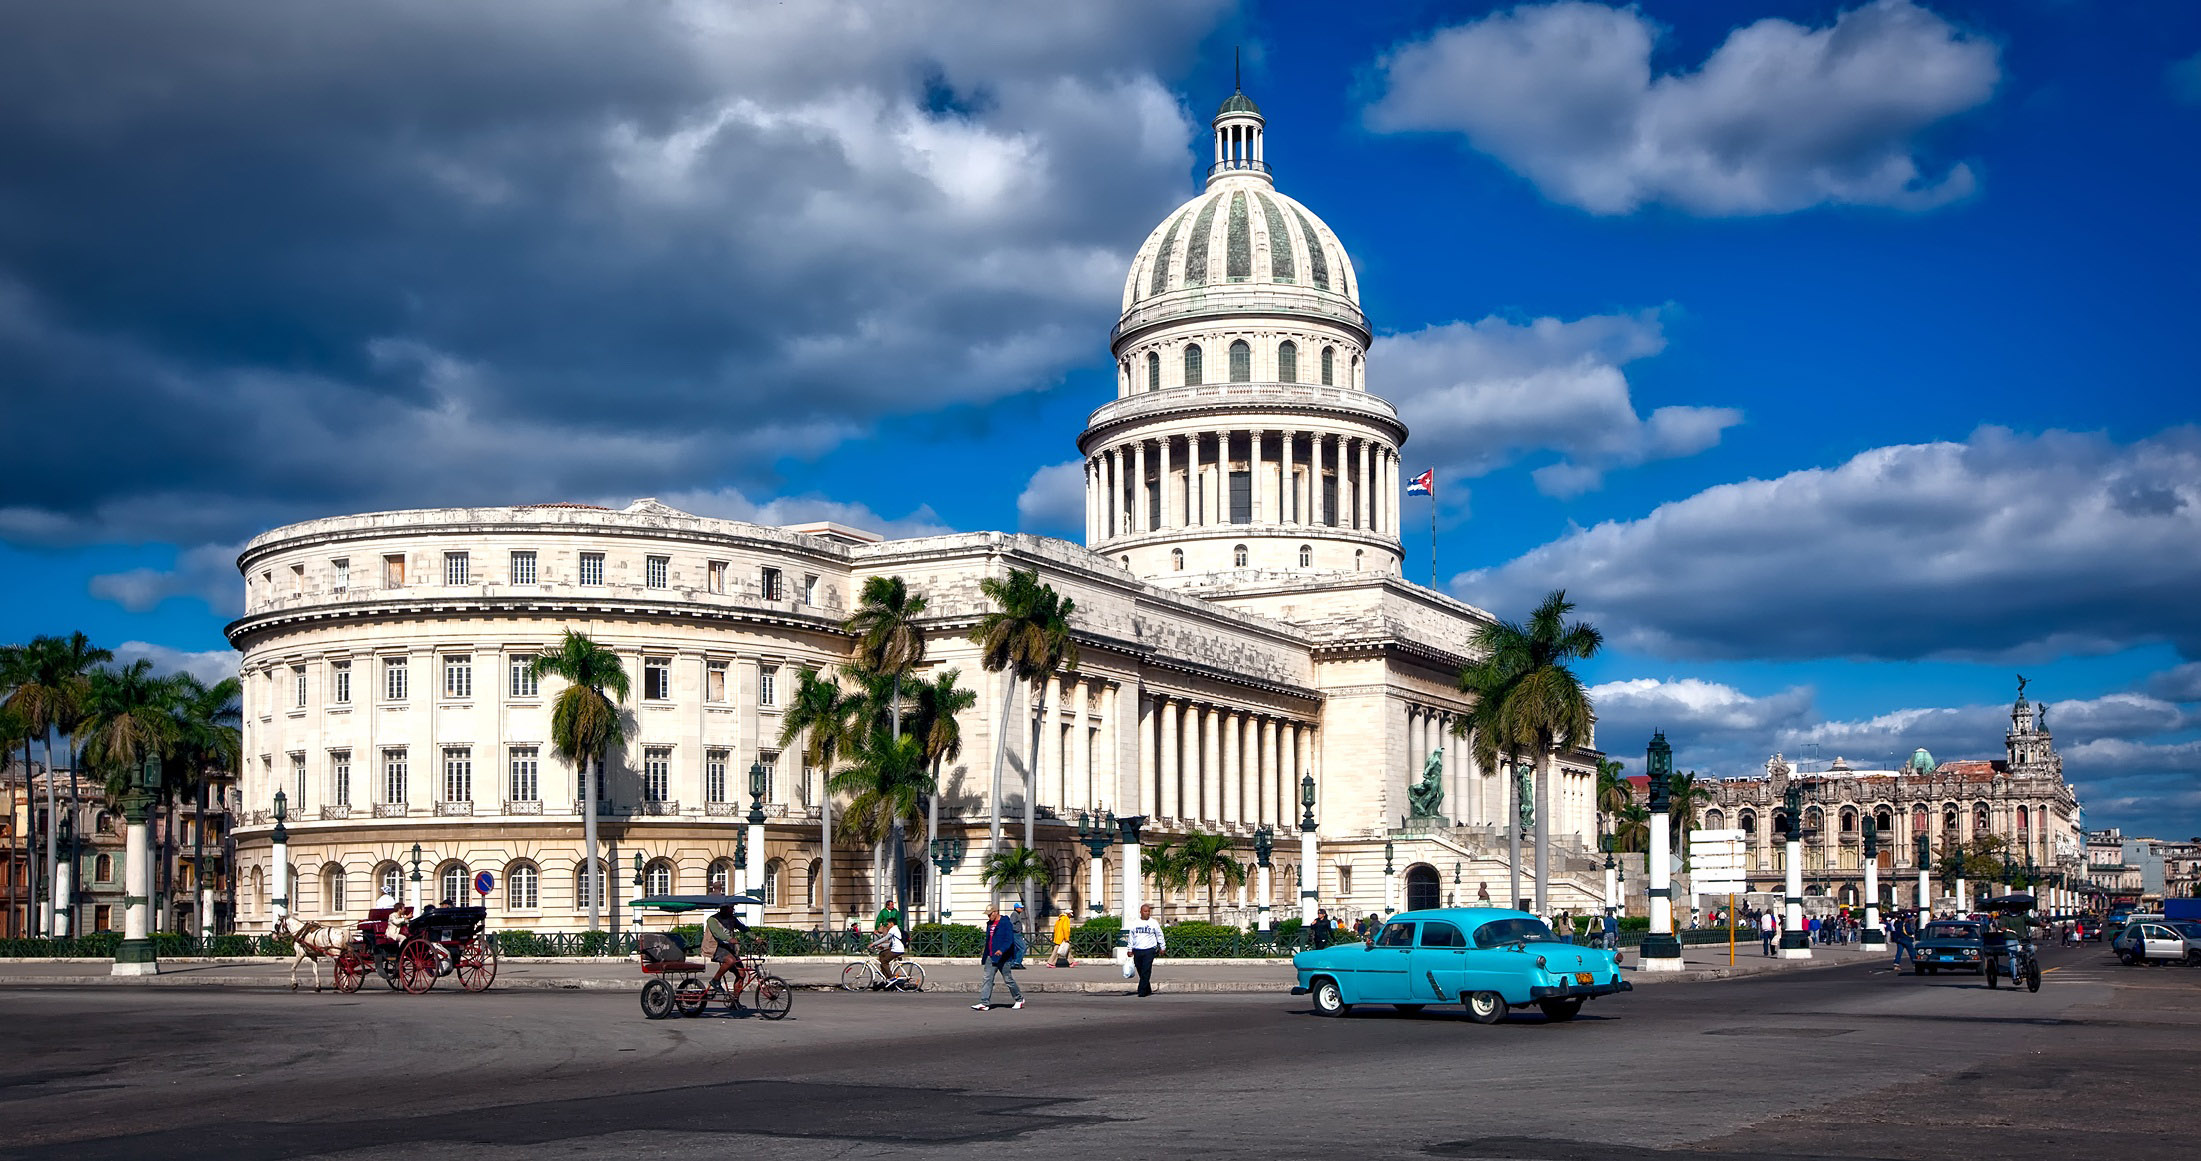 Capital building View in Havana, Cuba image - Free stock photo - Public